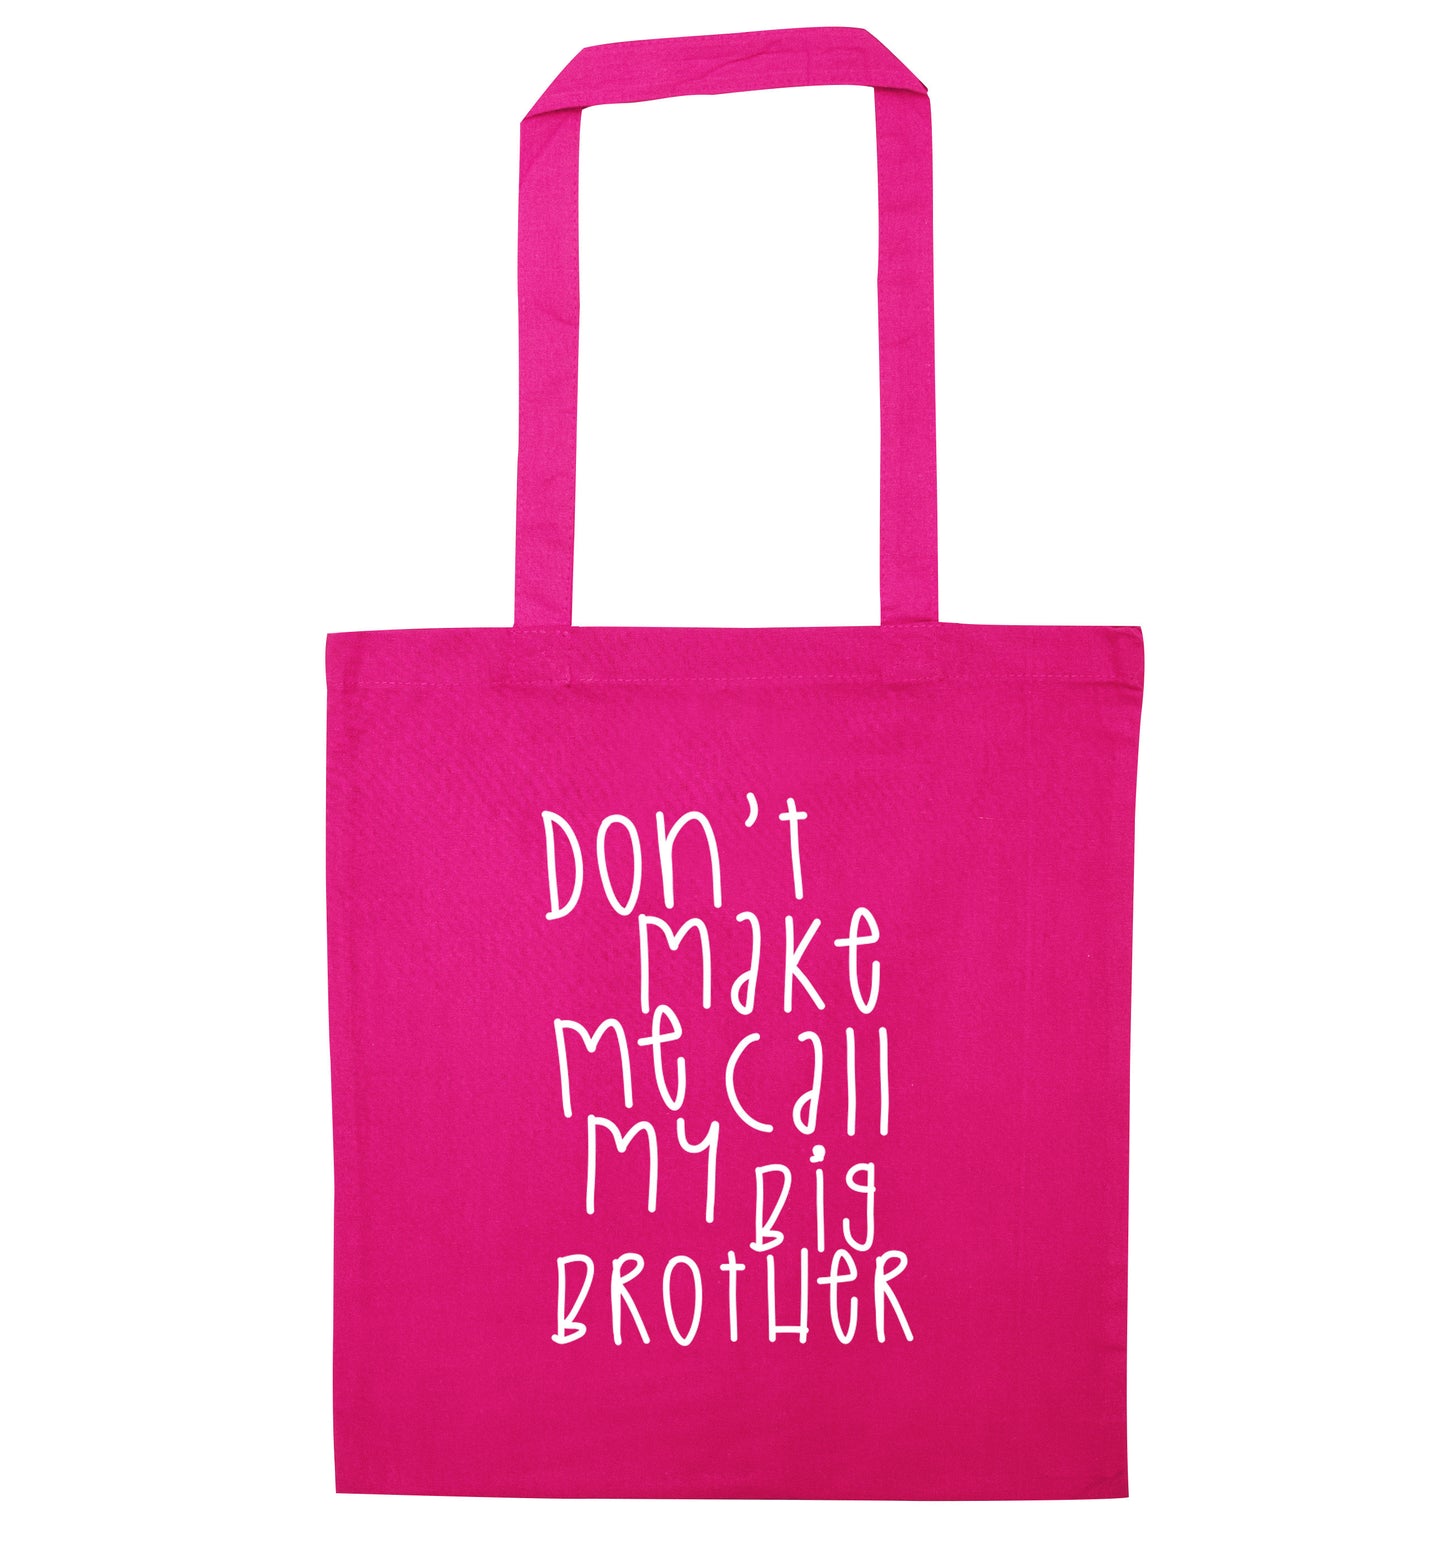 Don't make me call my big brother pink tote bag